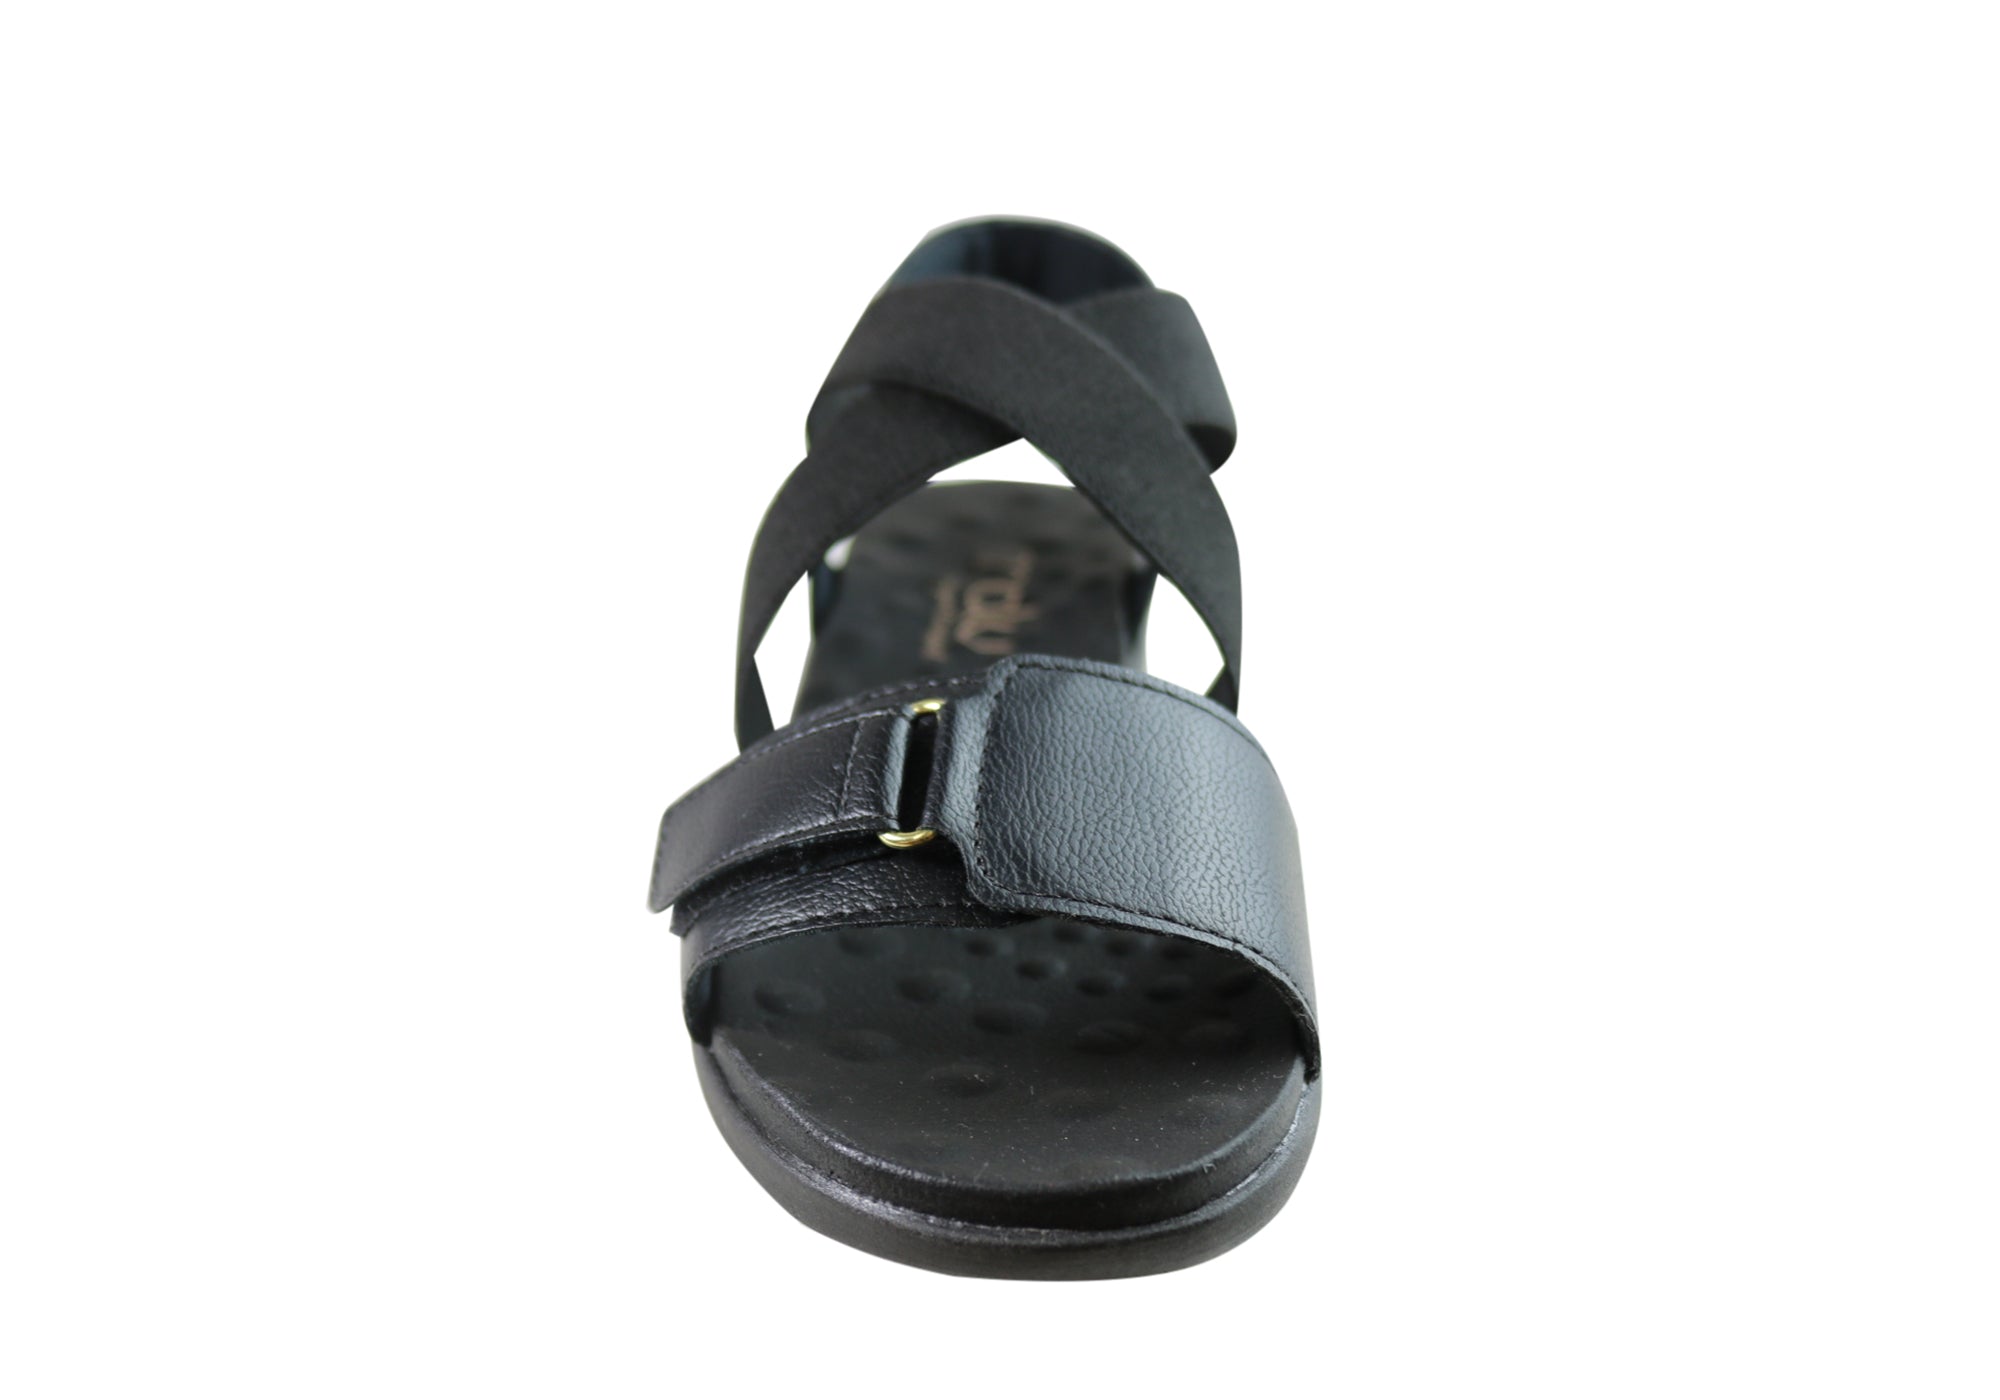 Malu Supercomfort Britta Womens Comfortable Sandals Made In Brazil